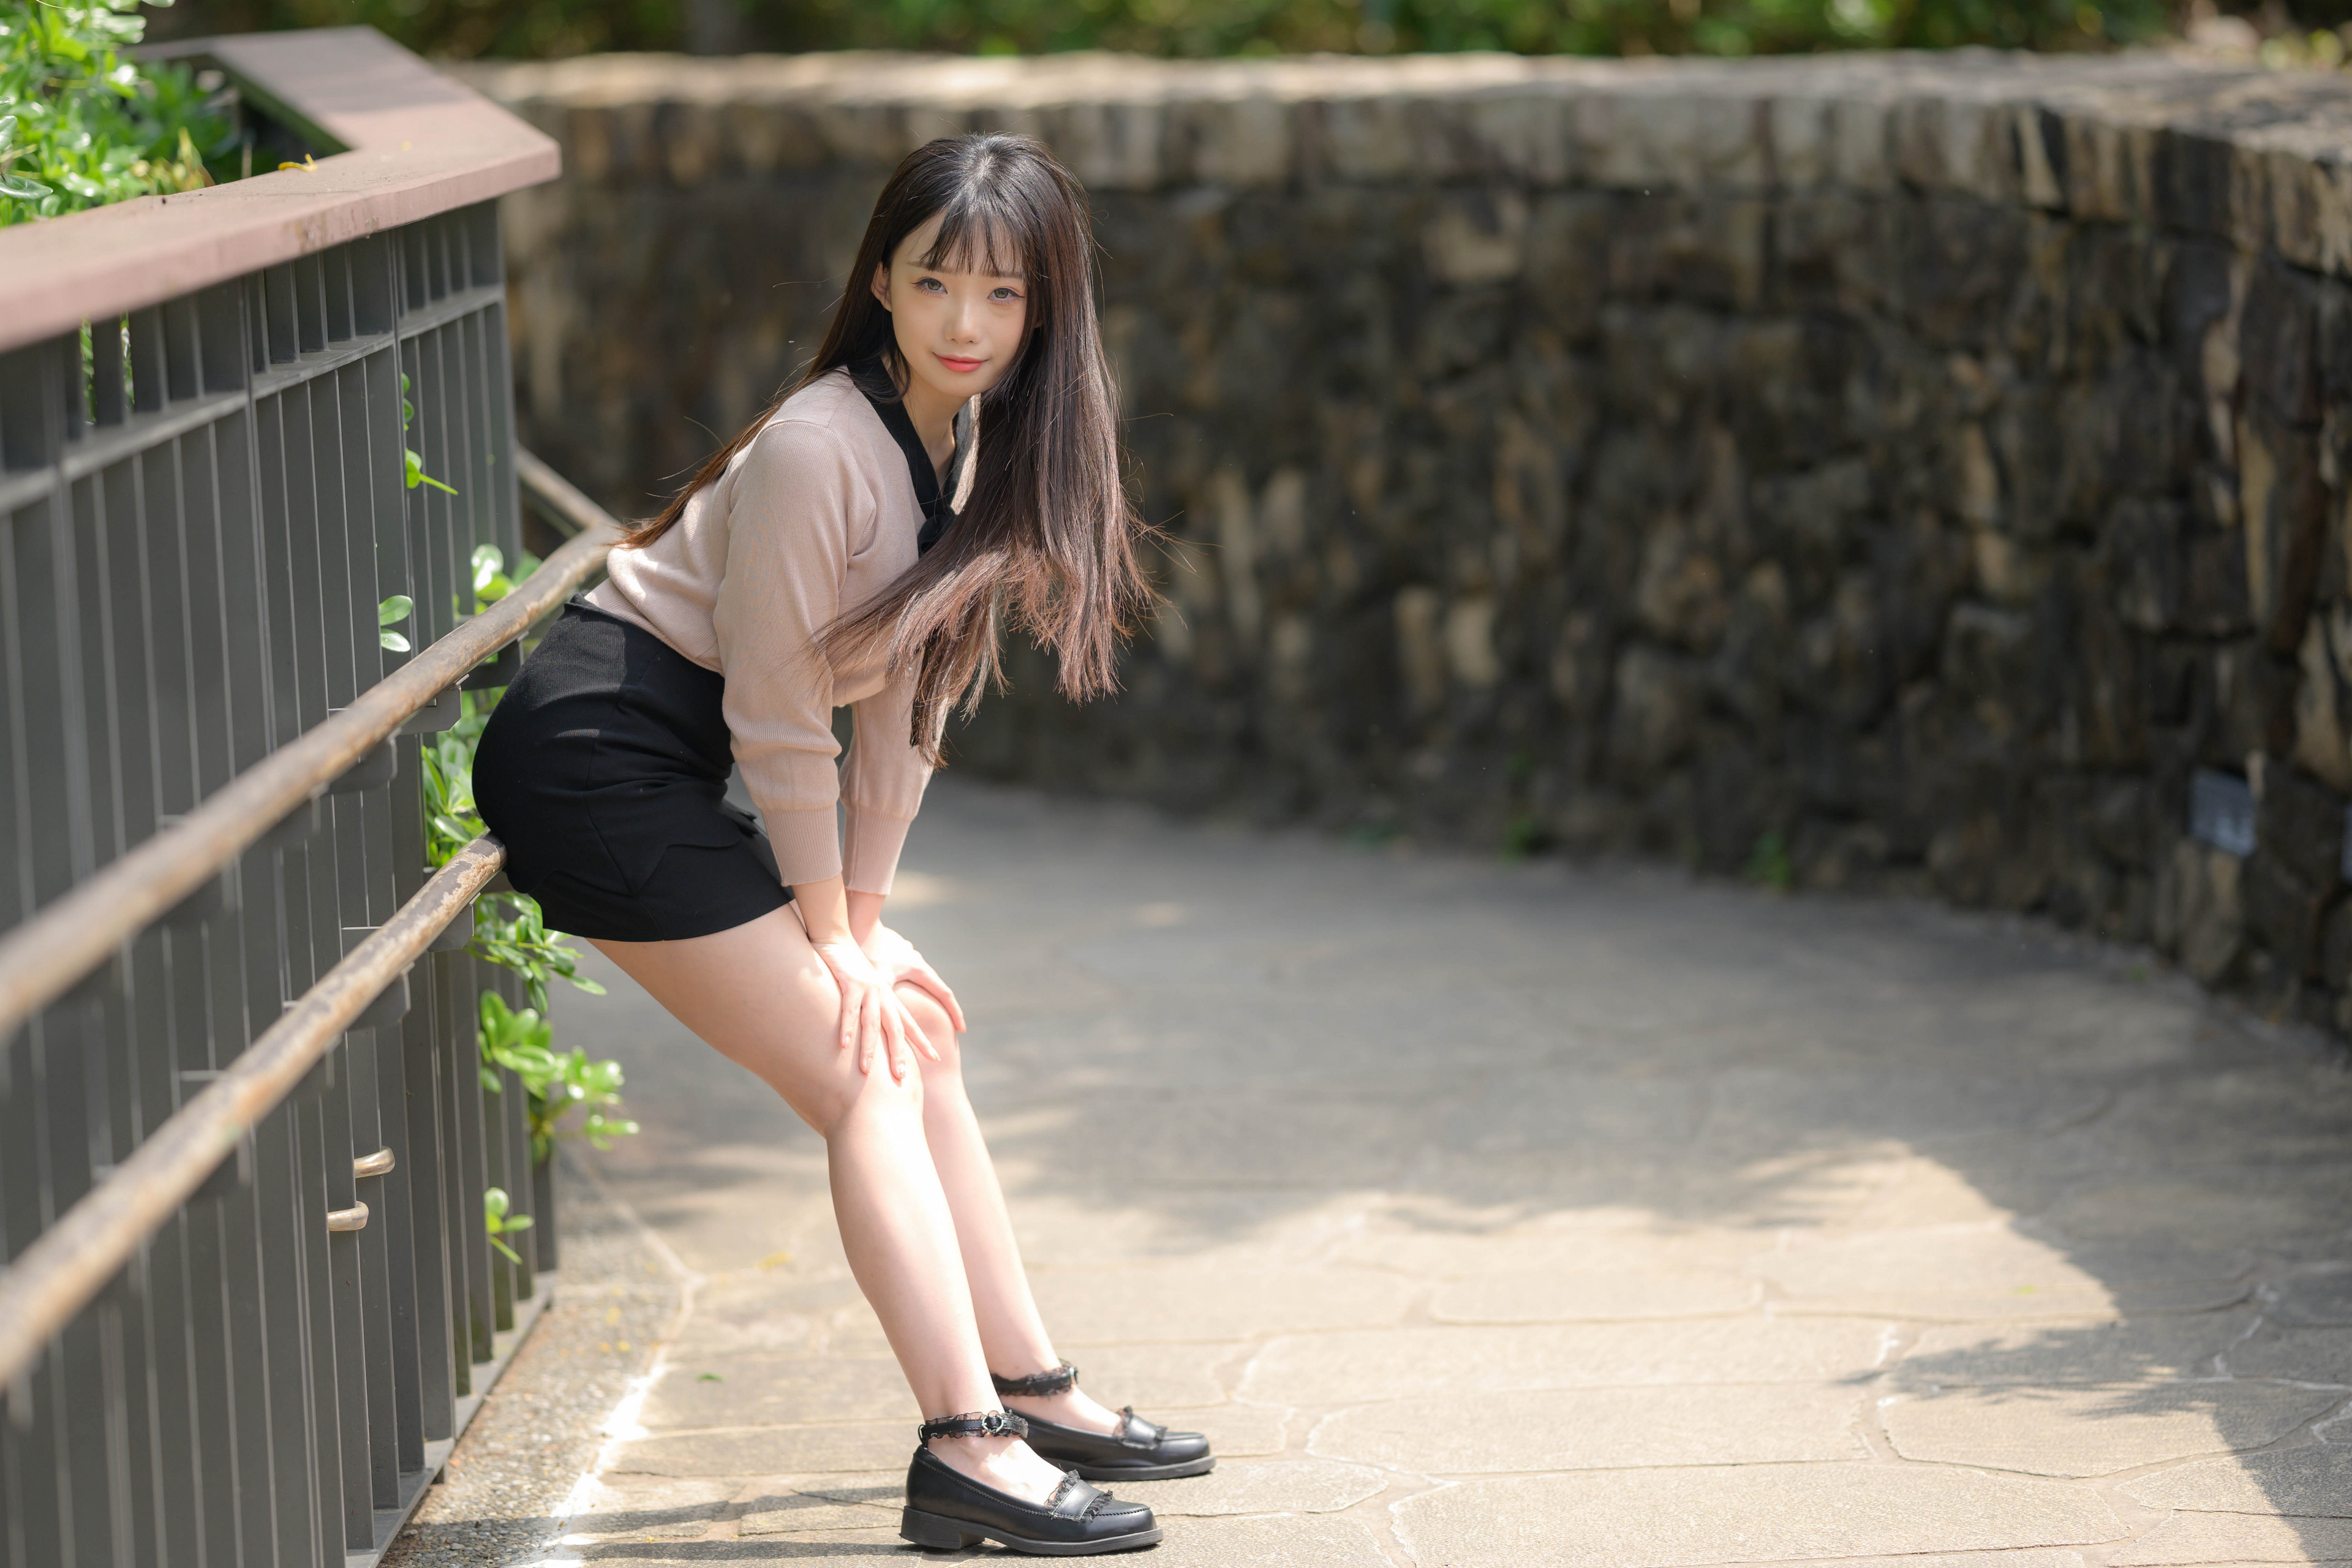 Asian Model Women Long Hair Dark Hair Ning Shioulin Leaning 3840x2560